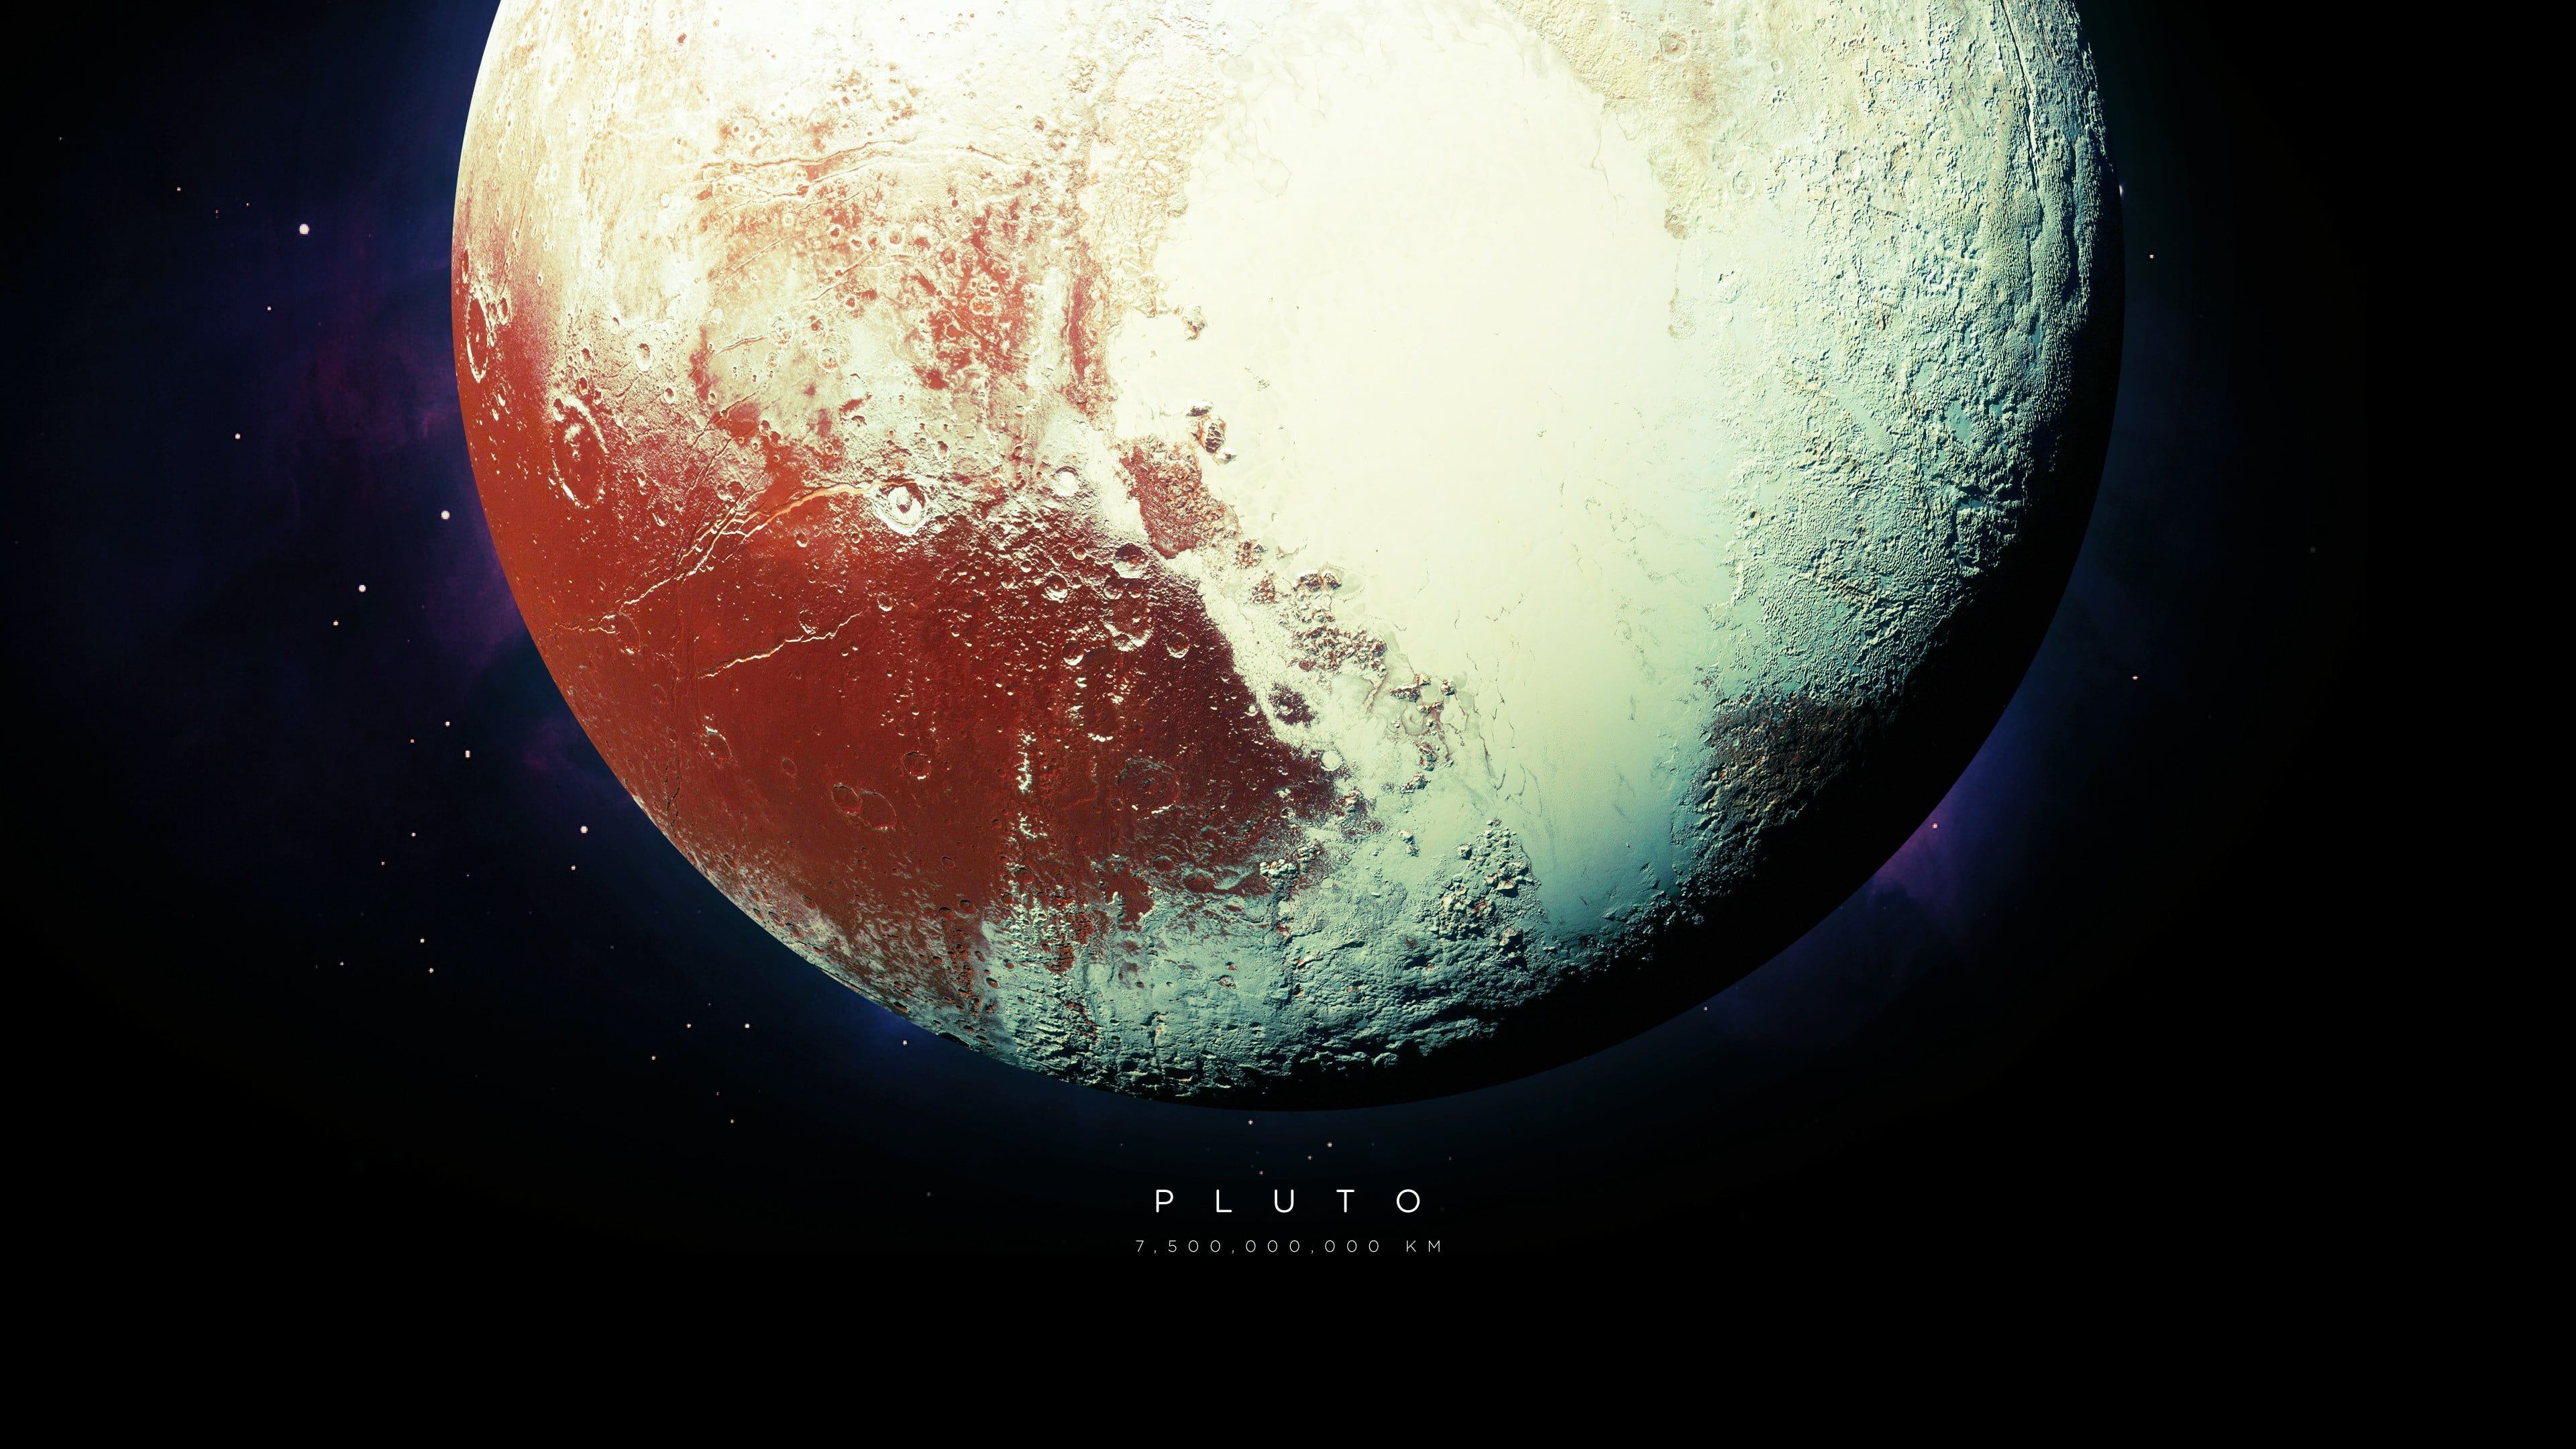 Pluto planet #Pluto #universe #stars #planet #space K #wallpaper #hdwallpaper #desktop. Planets, Home decor picture, Poster prints